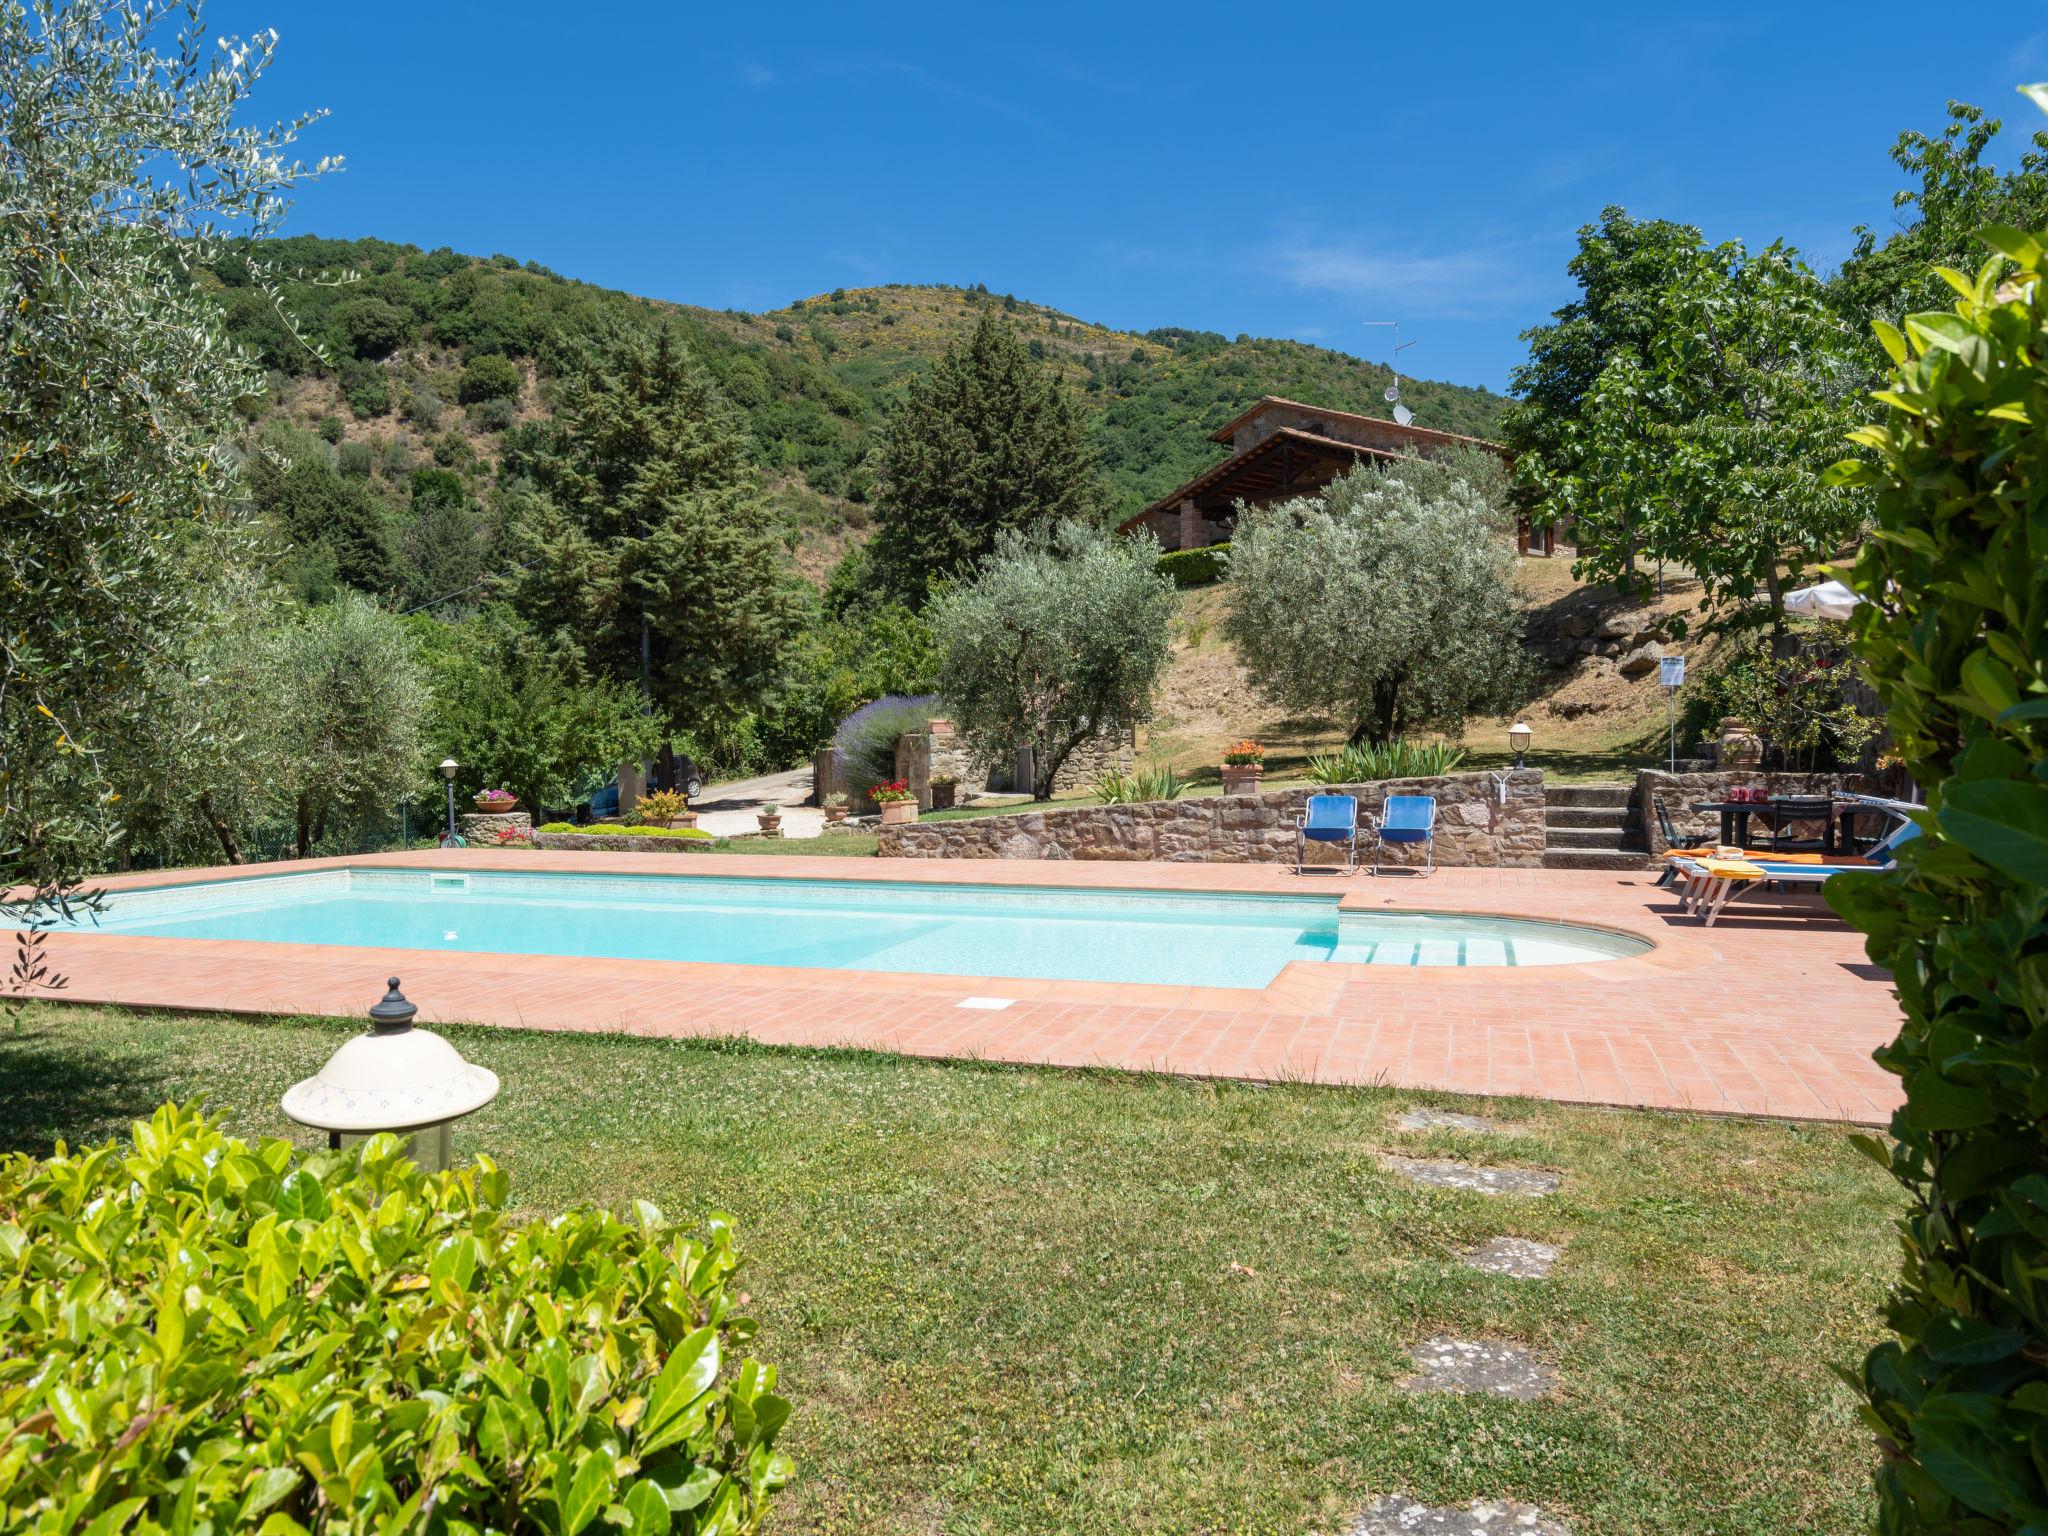 Photo 26 - Maison de 2 chambres à Castiglion Fiorentino avec piscine privée et terrasse